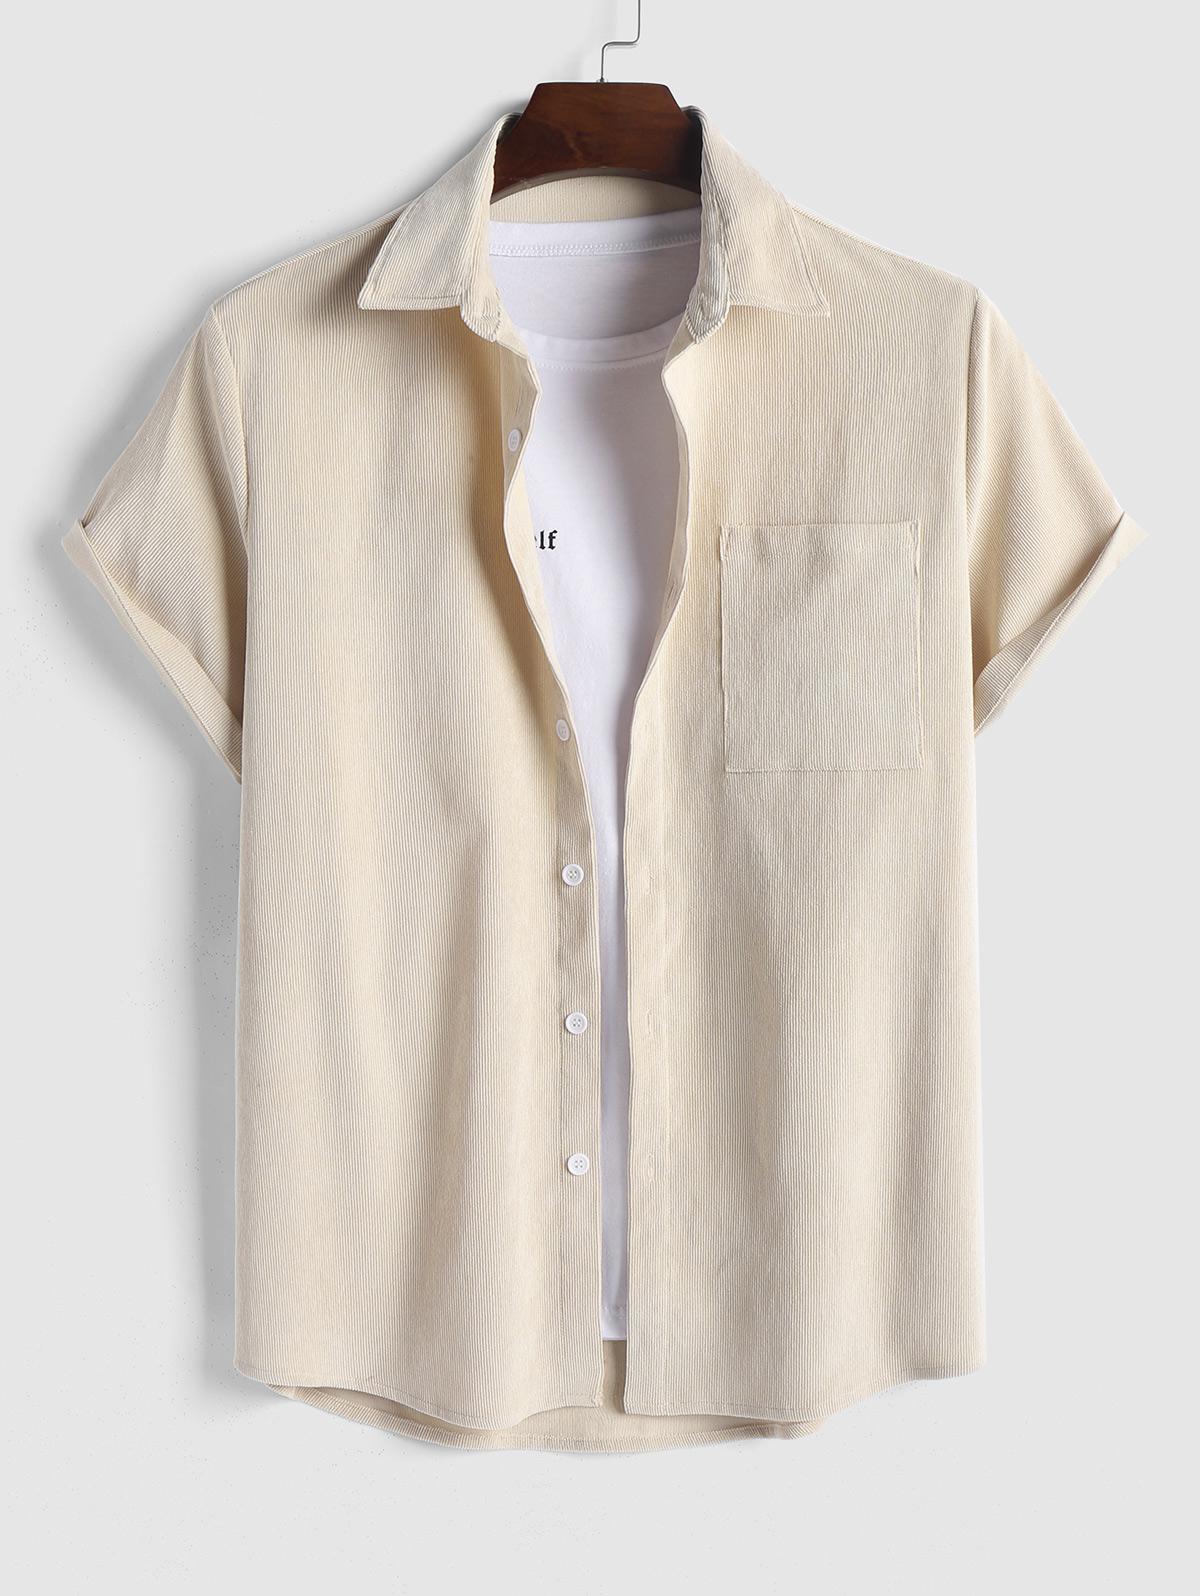 ZAFUL Men's ZAFUL Front Pocket Design Solid Color Corduroy Short Sleeves Shirt S Light coffee